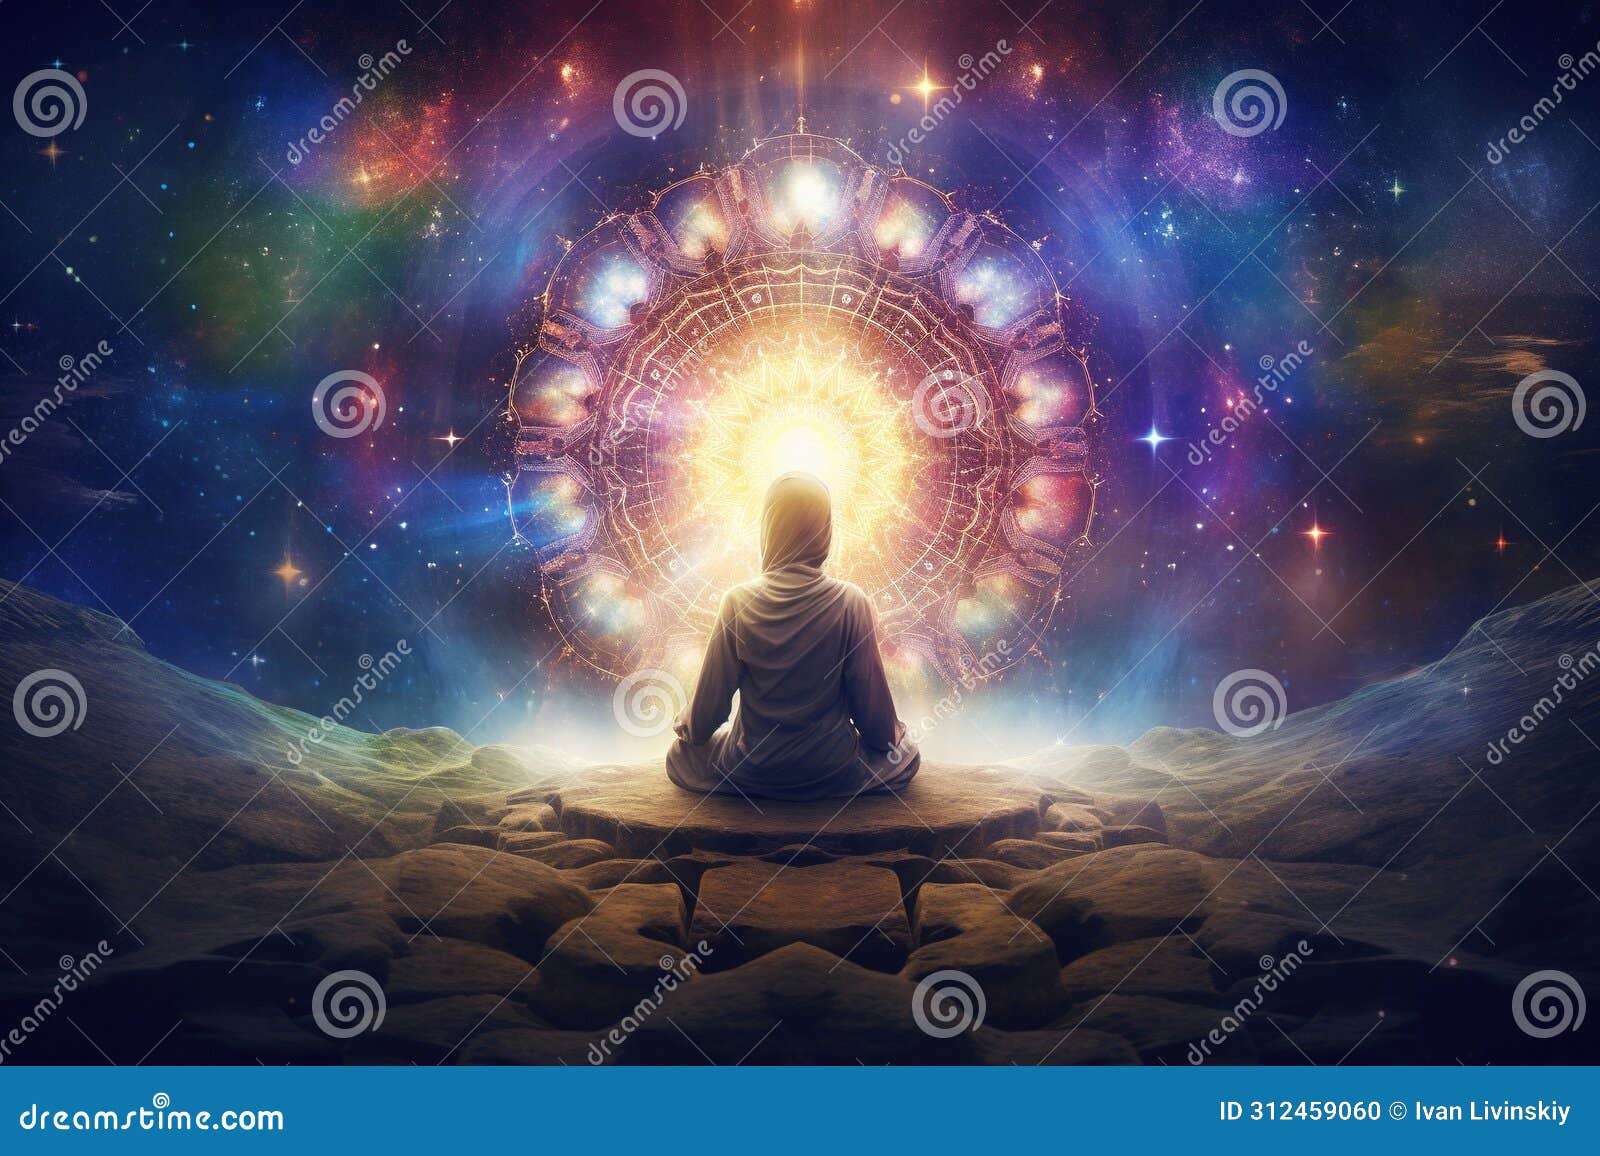 universe, cosmos. meditation background, chakras, prana, the mind of god and spirituality